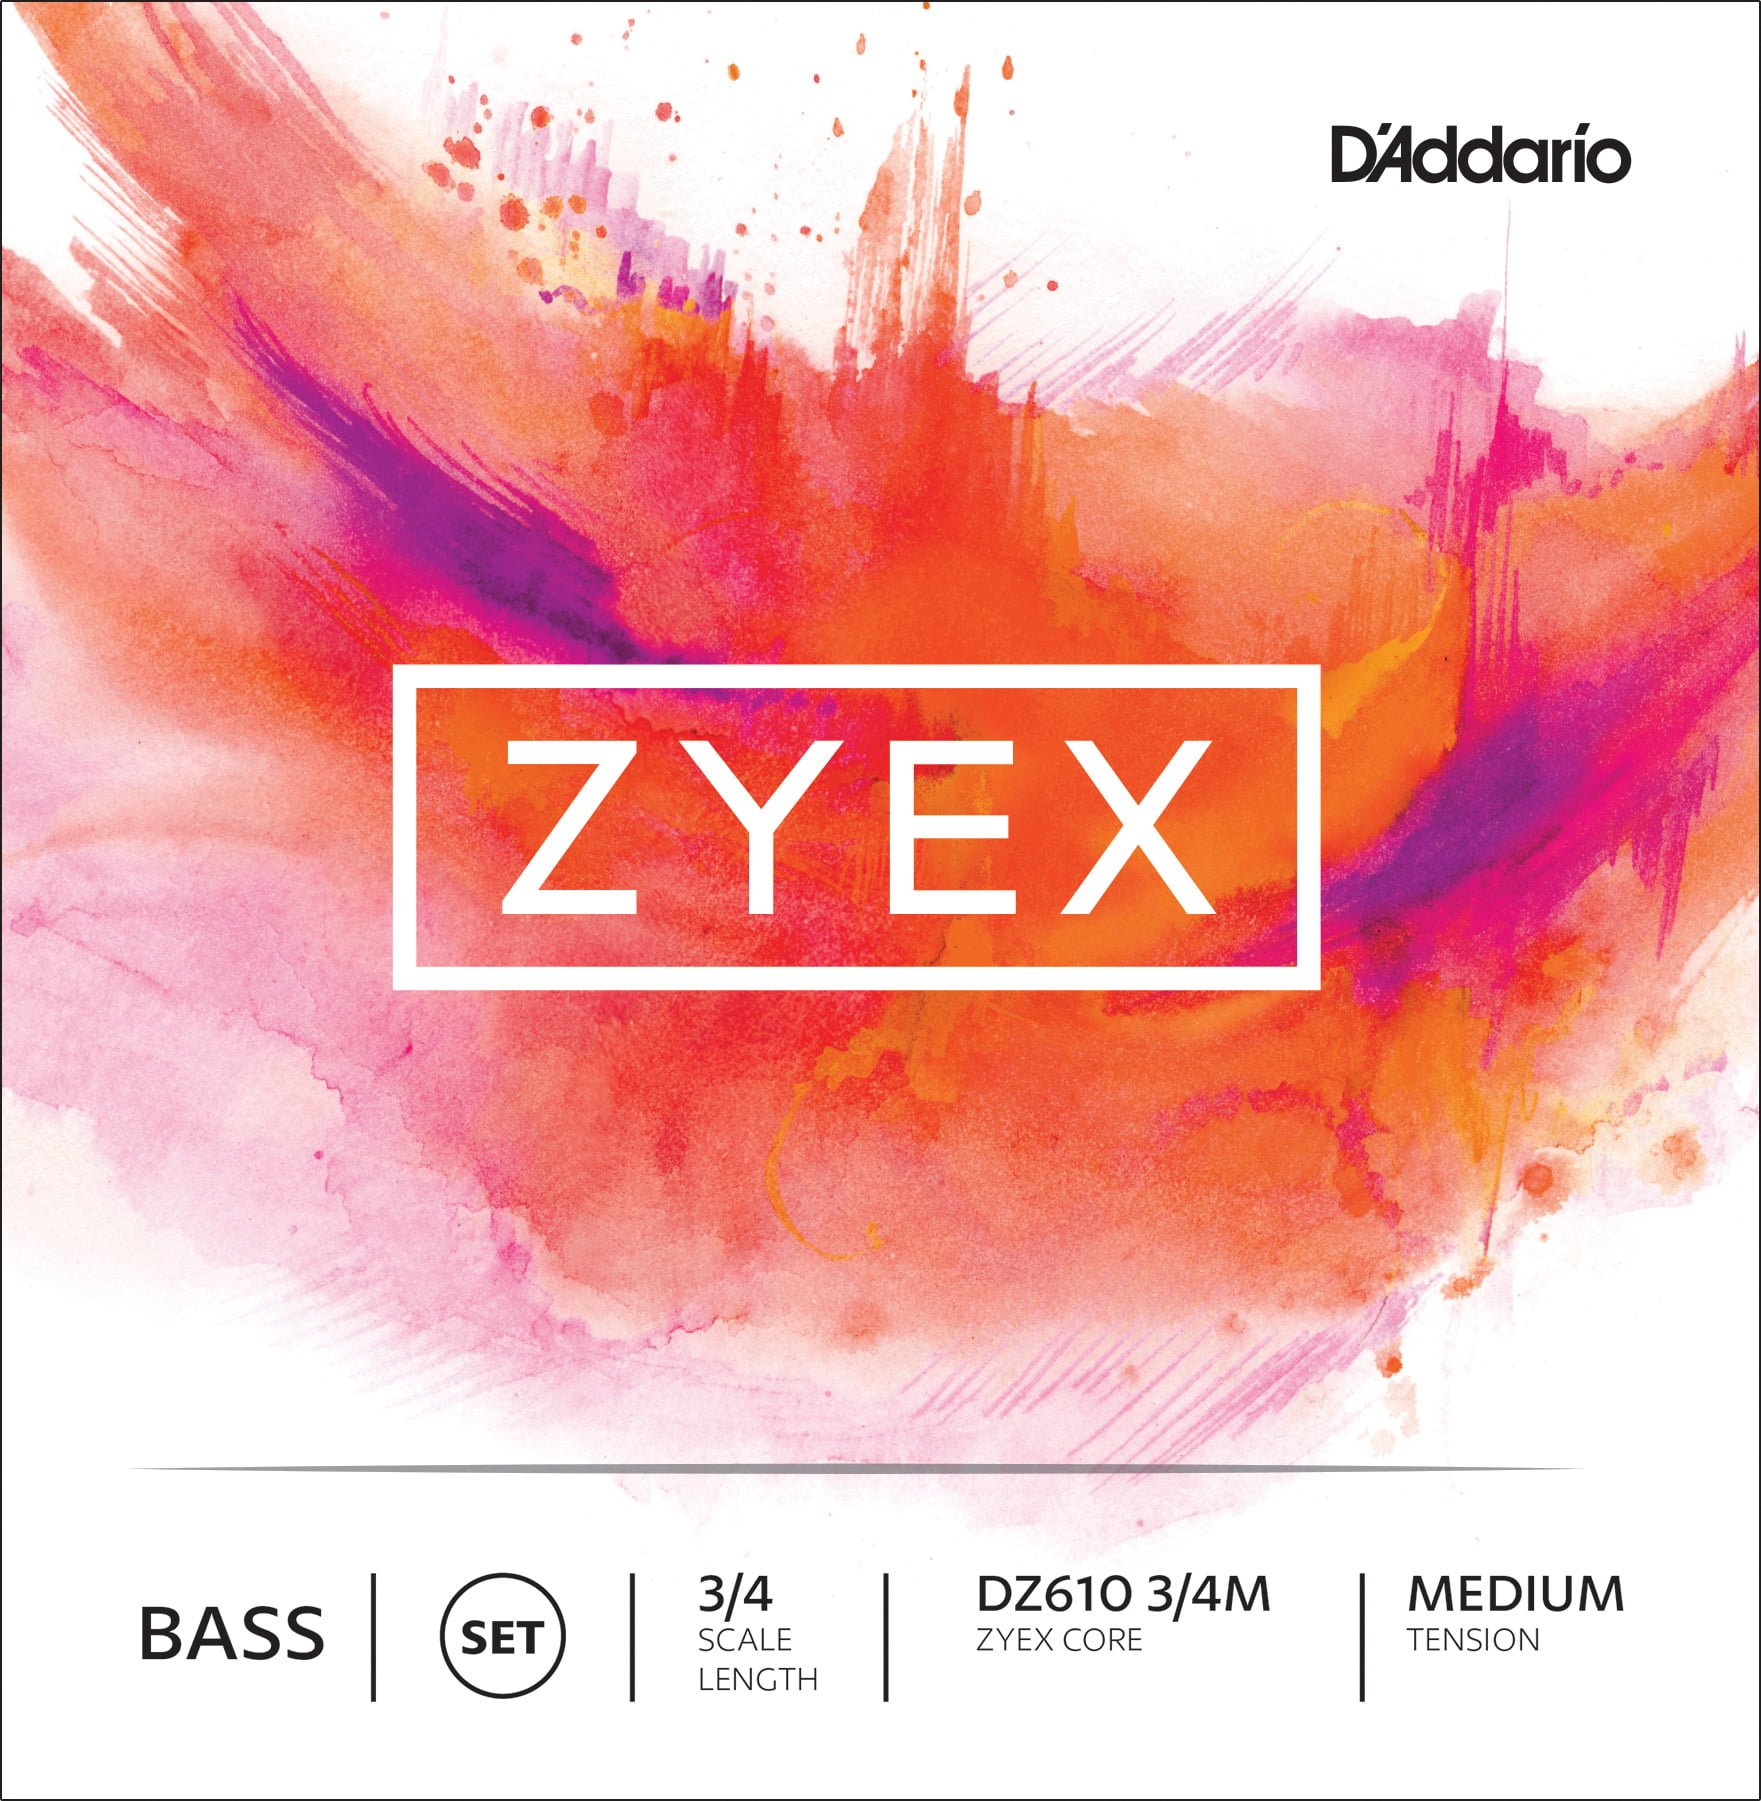 D'Addario Zyex Double Bass Strings - Bass Bags